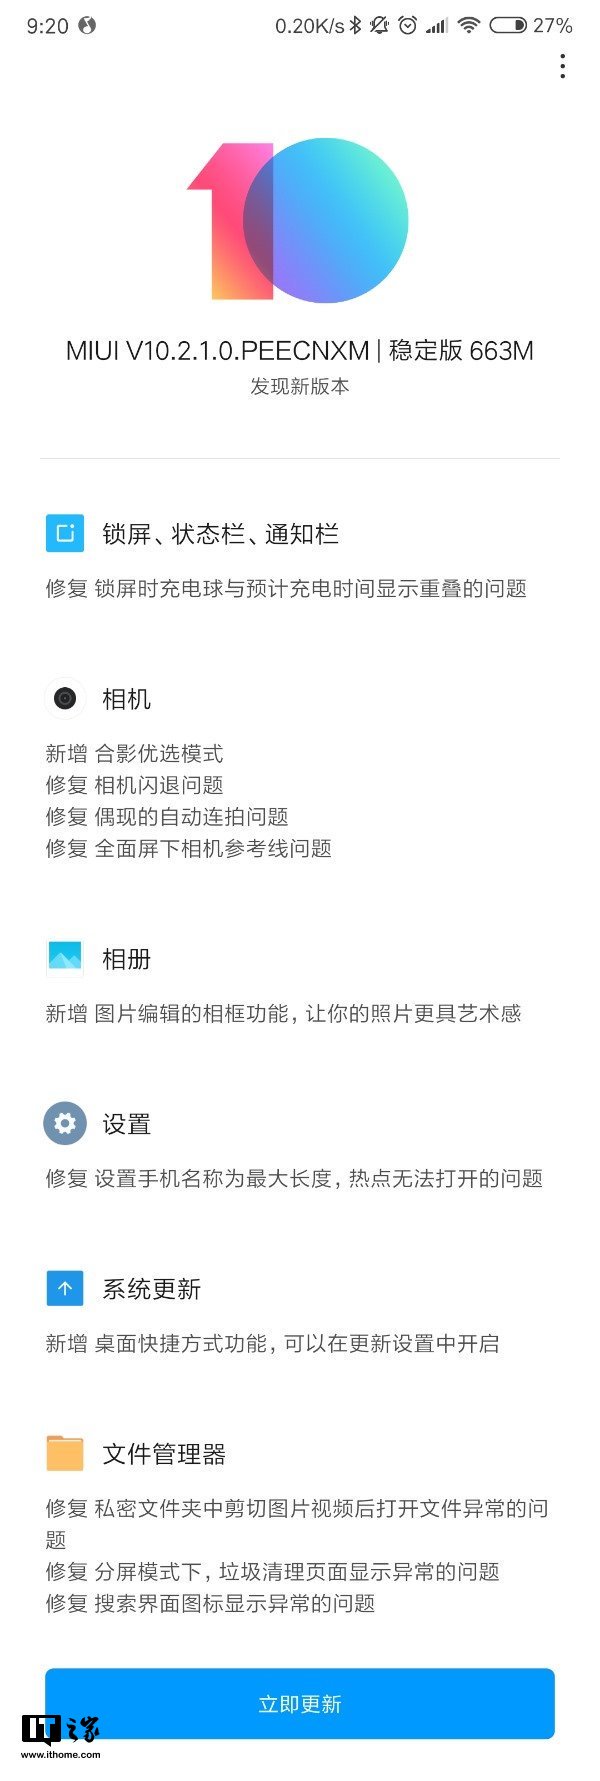 Xiaomi Mi Mix 3 Newest Miui 10.2.1 Update Brings Fix For Rear Digital Camera Flash Problem Among Others